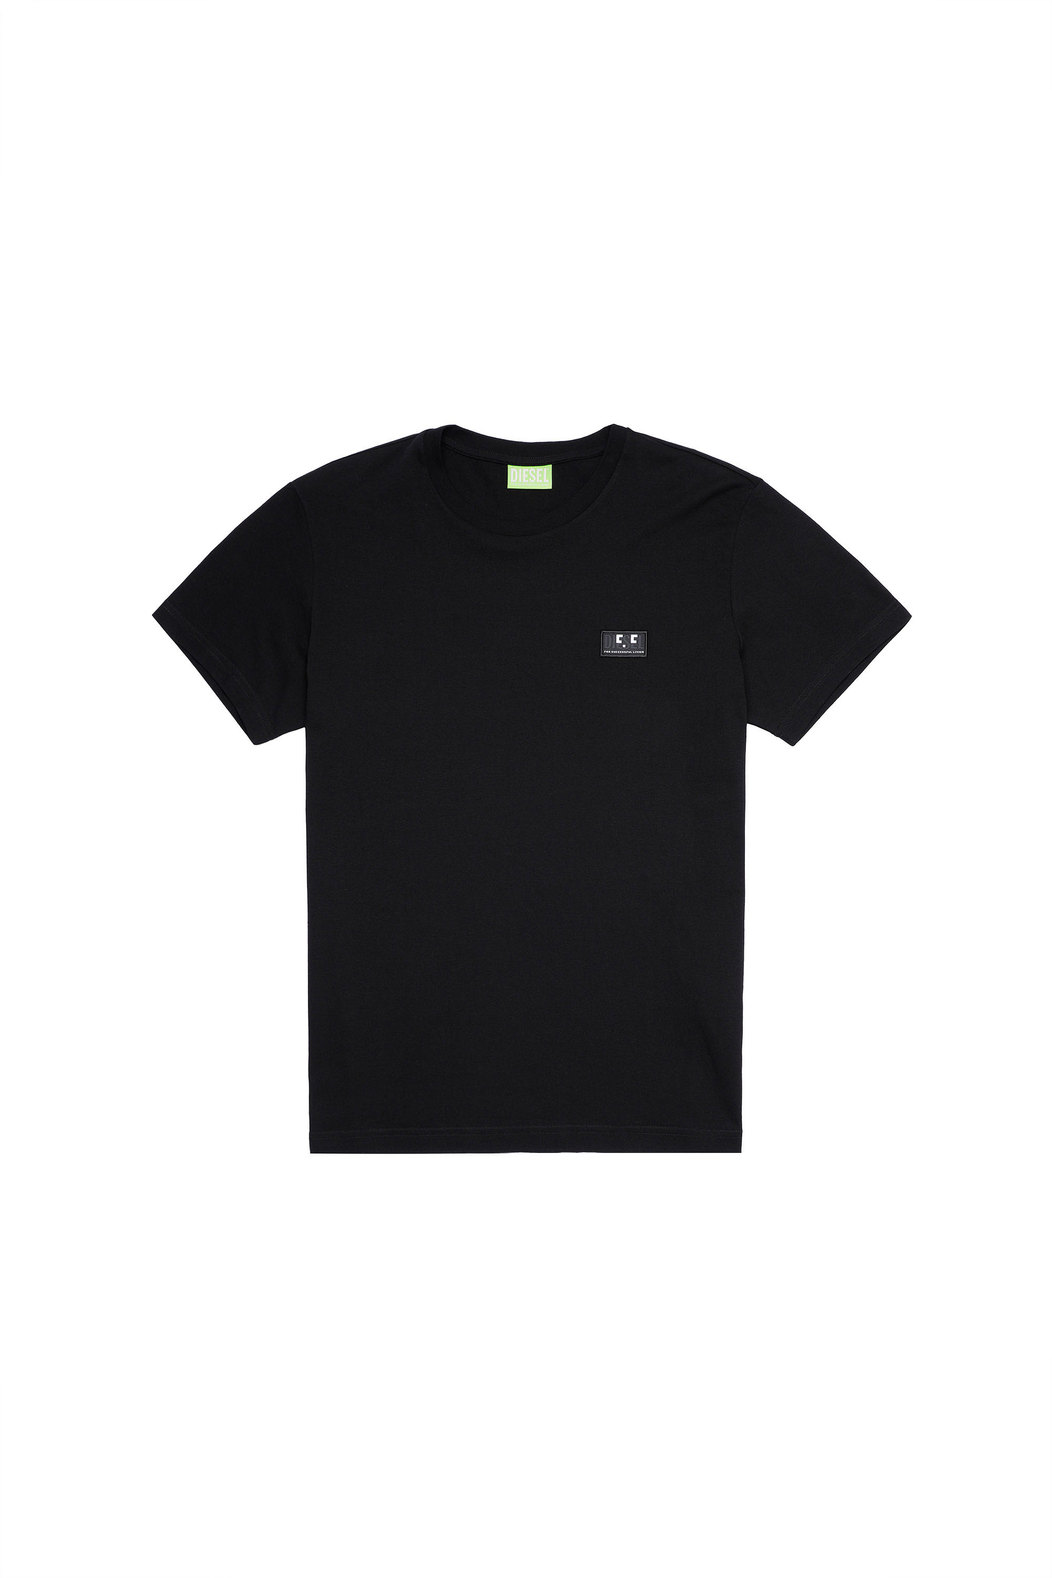 Green Label T-shirt with emoji logo